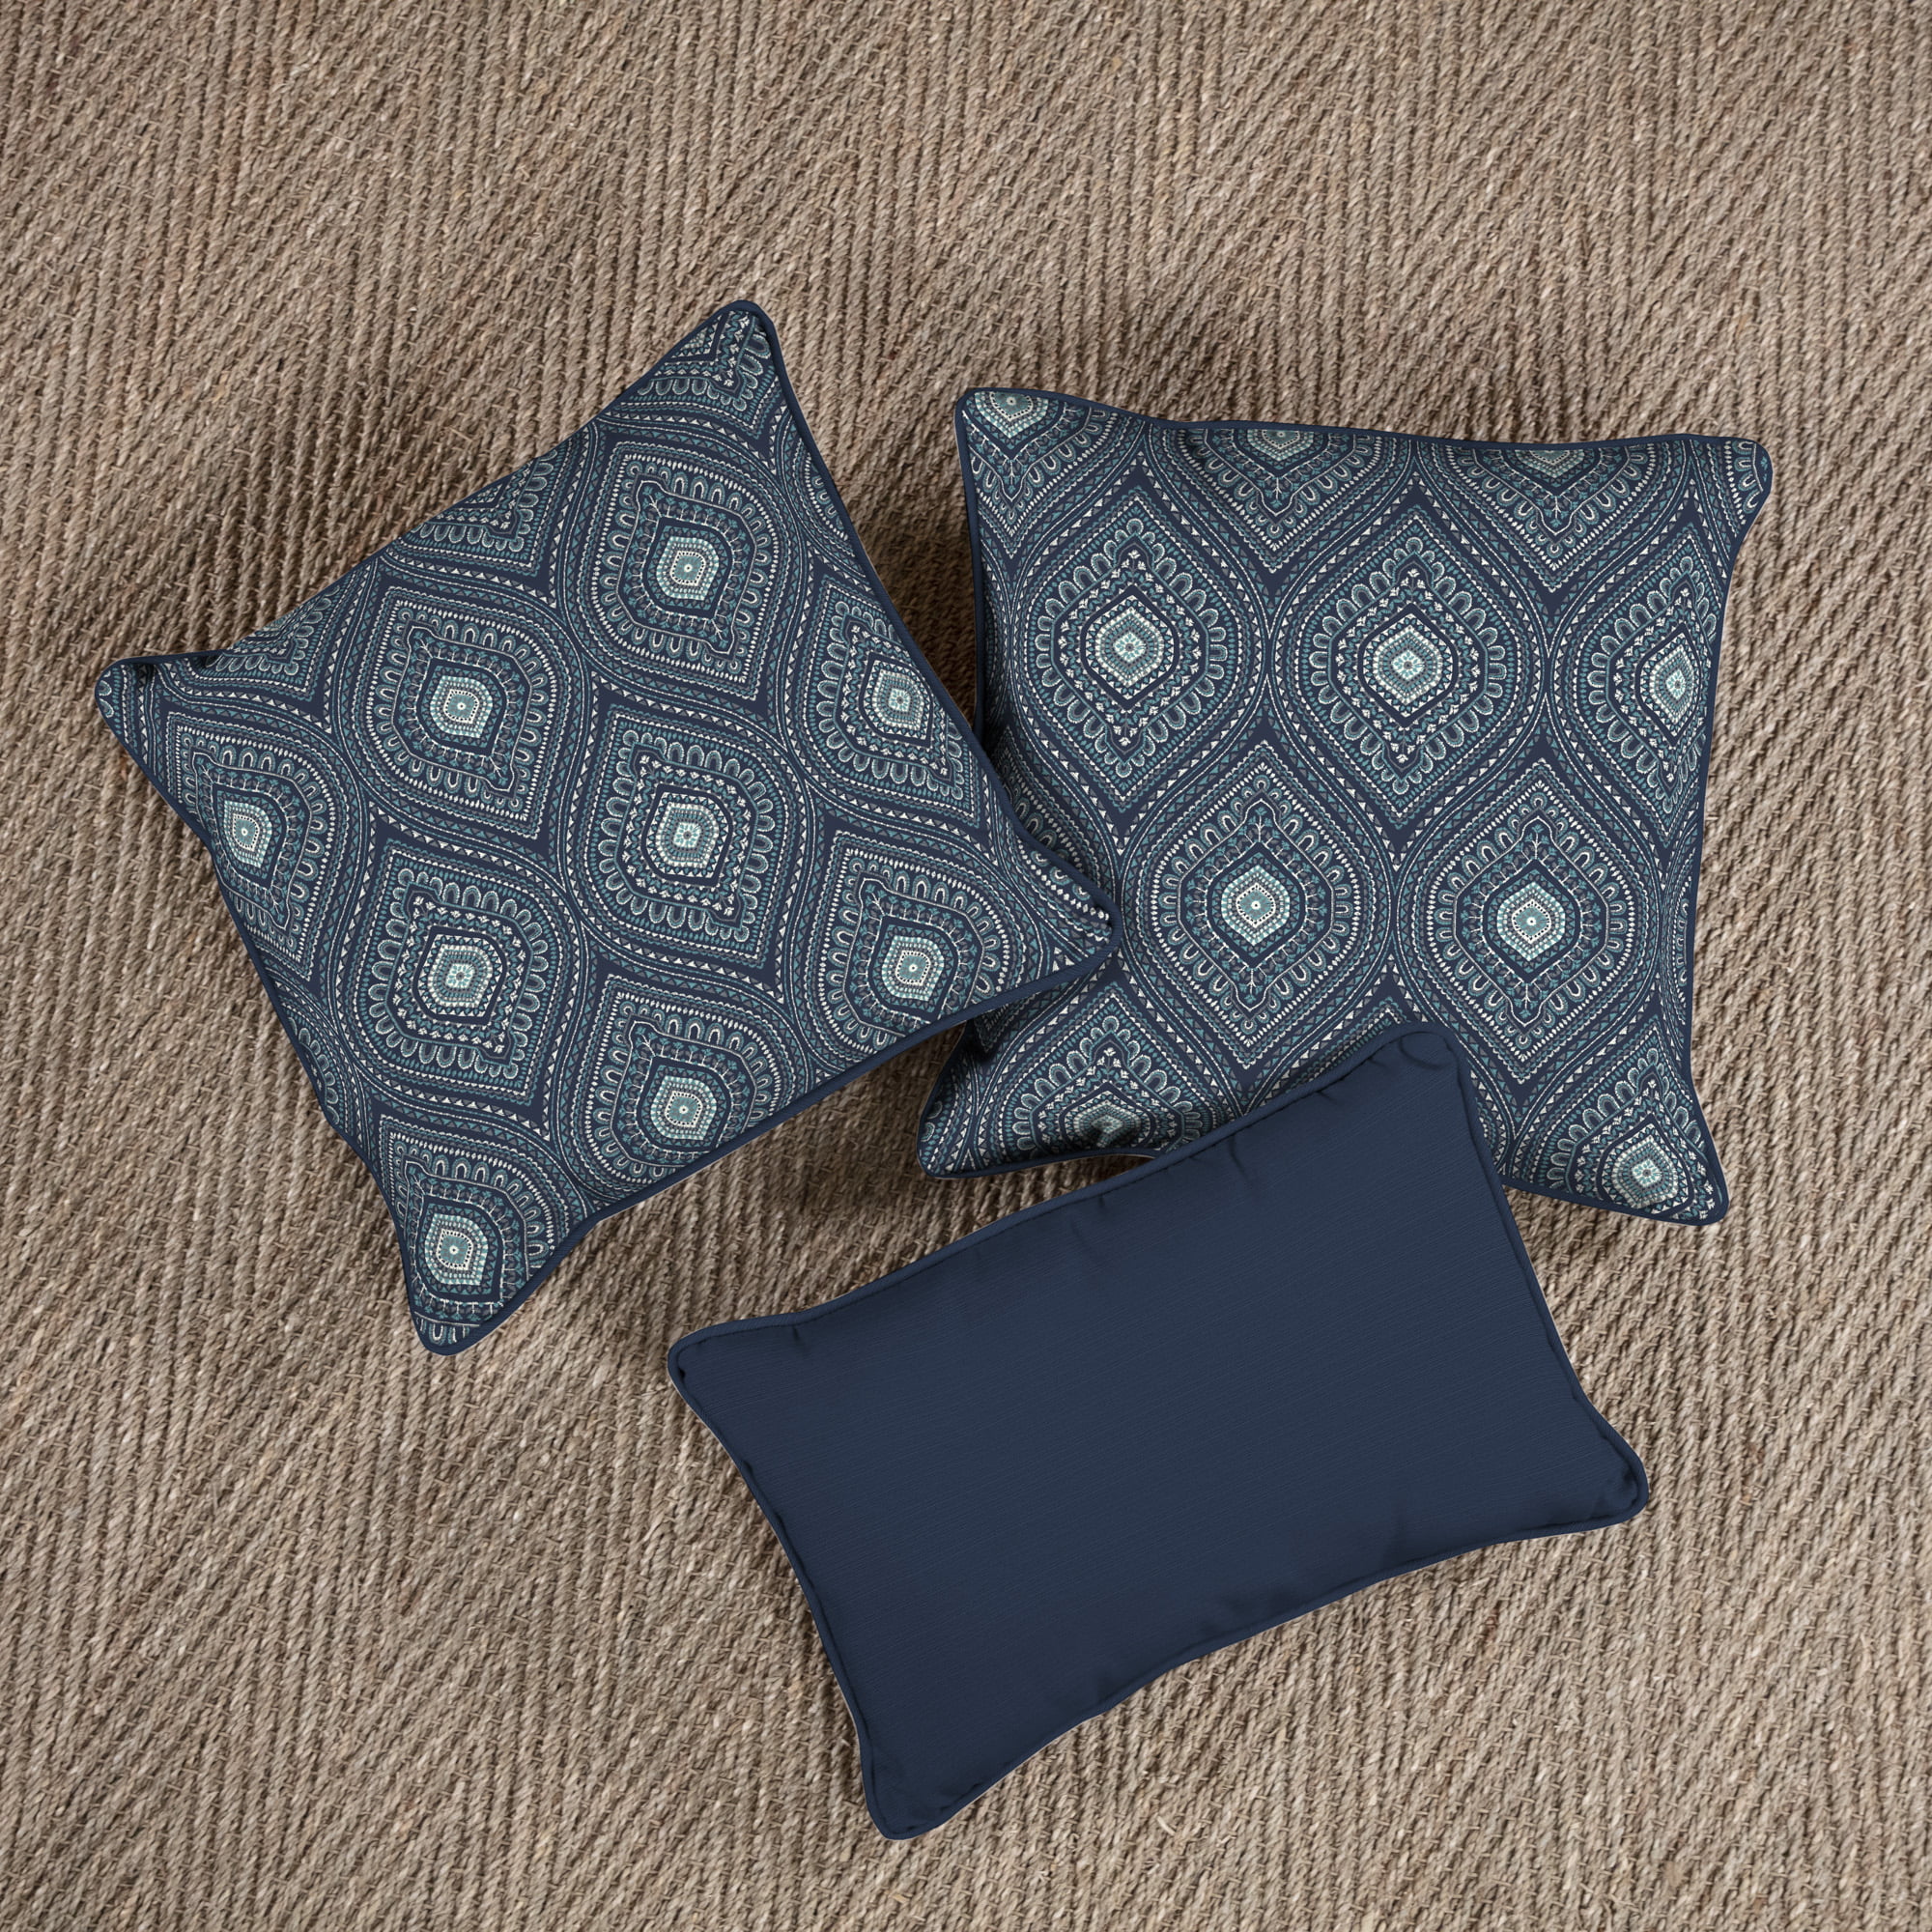 Better Homes & Gardens 20 x 20 Blue Medallion Polyester Outdoor Throw  Pillow (1 Piece) 